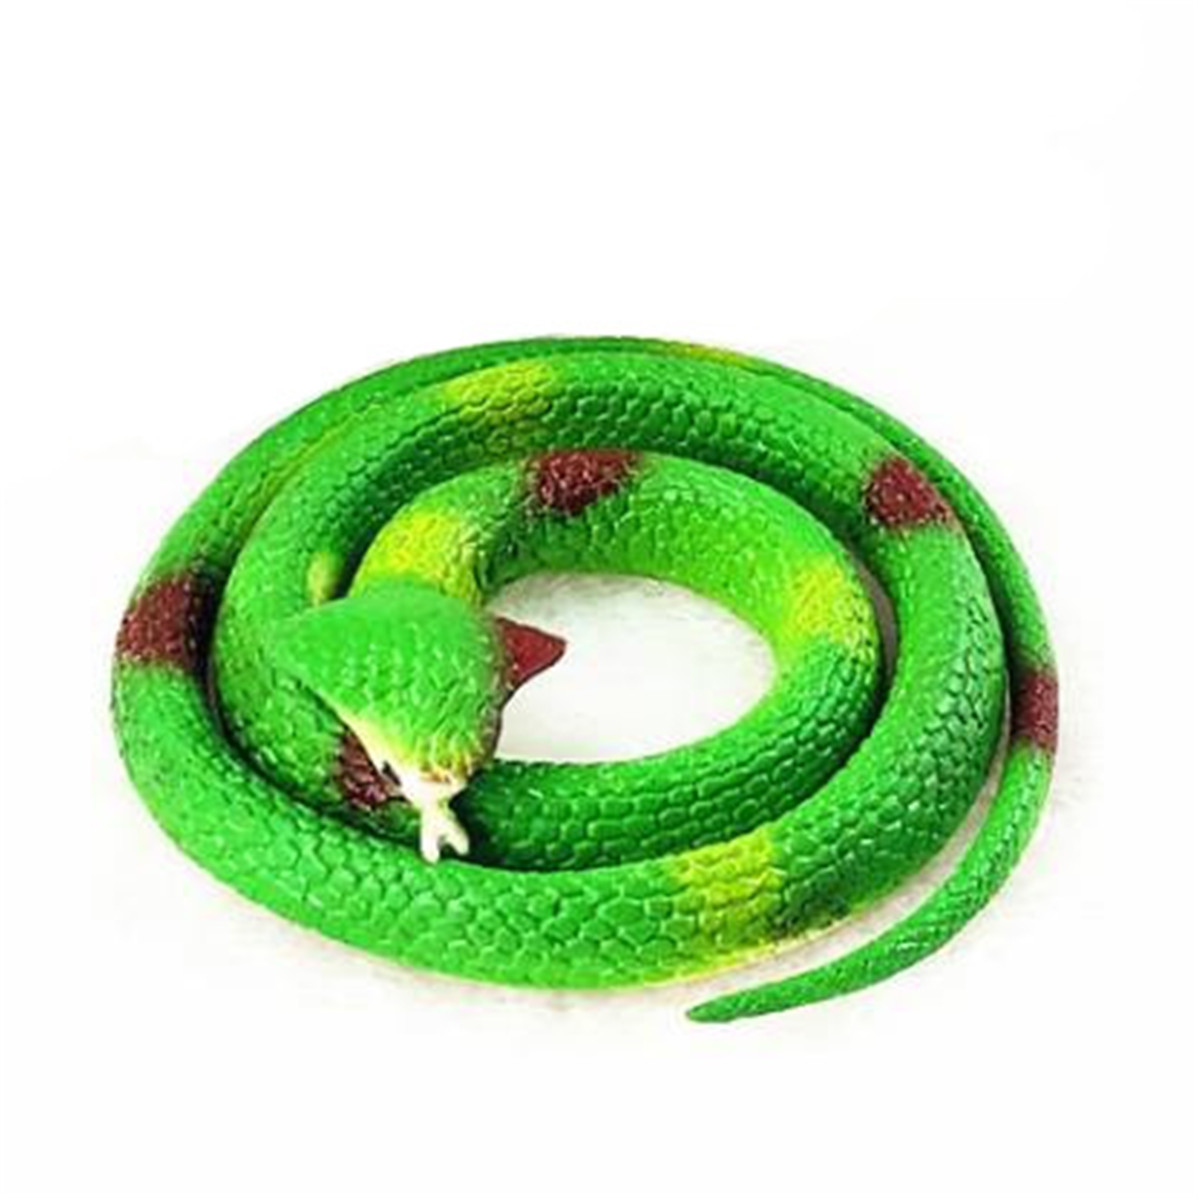 75cm Rubber Cobra Snake Fake Reptile Model Trick Prank Toy Garden ...